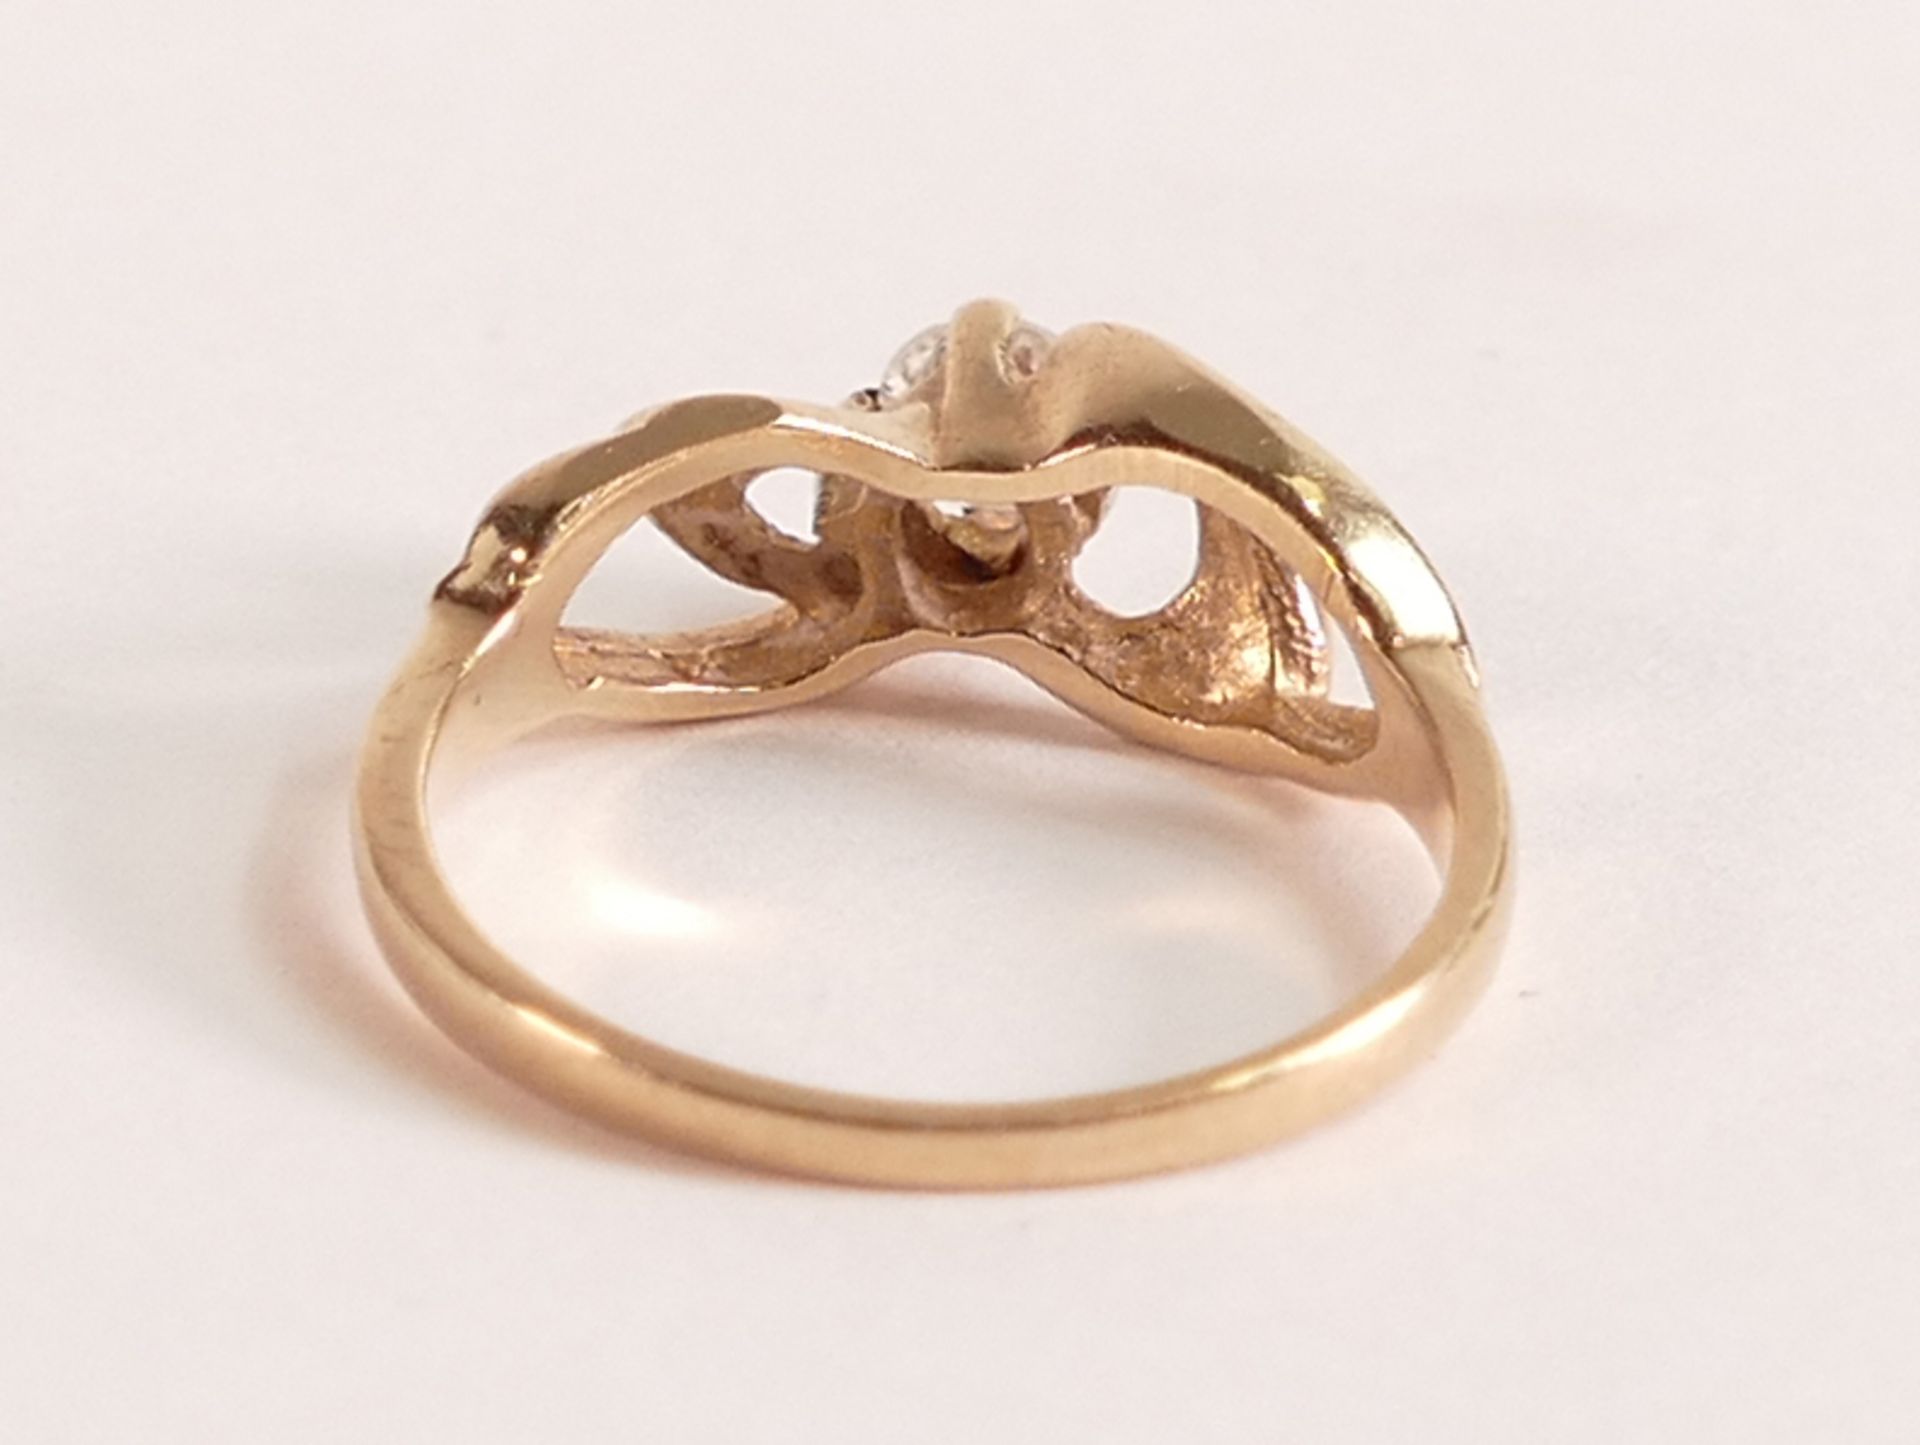 9ct yellow gold diamond ring, 1.9 grams, ring size J. - Image 3 of 3